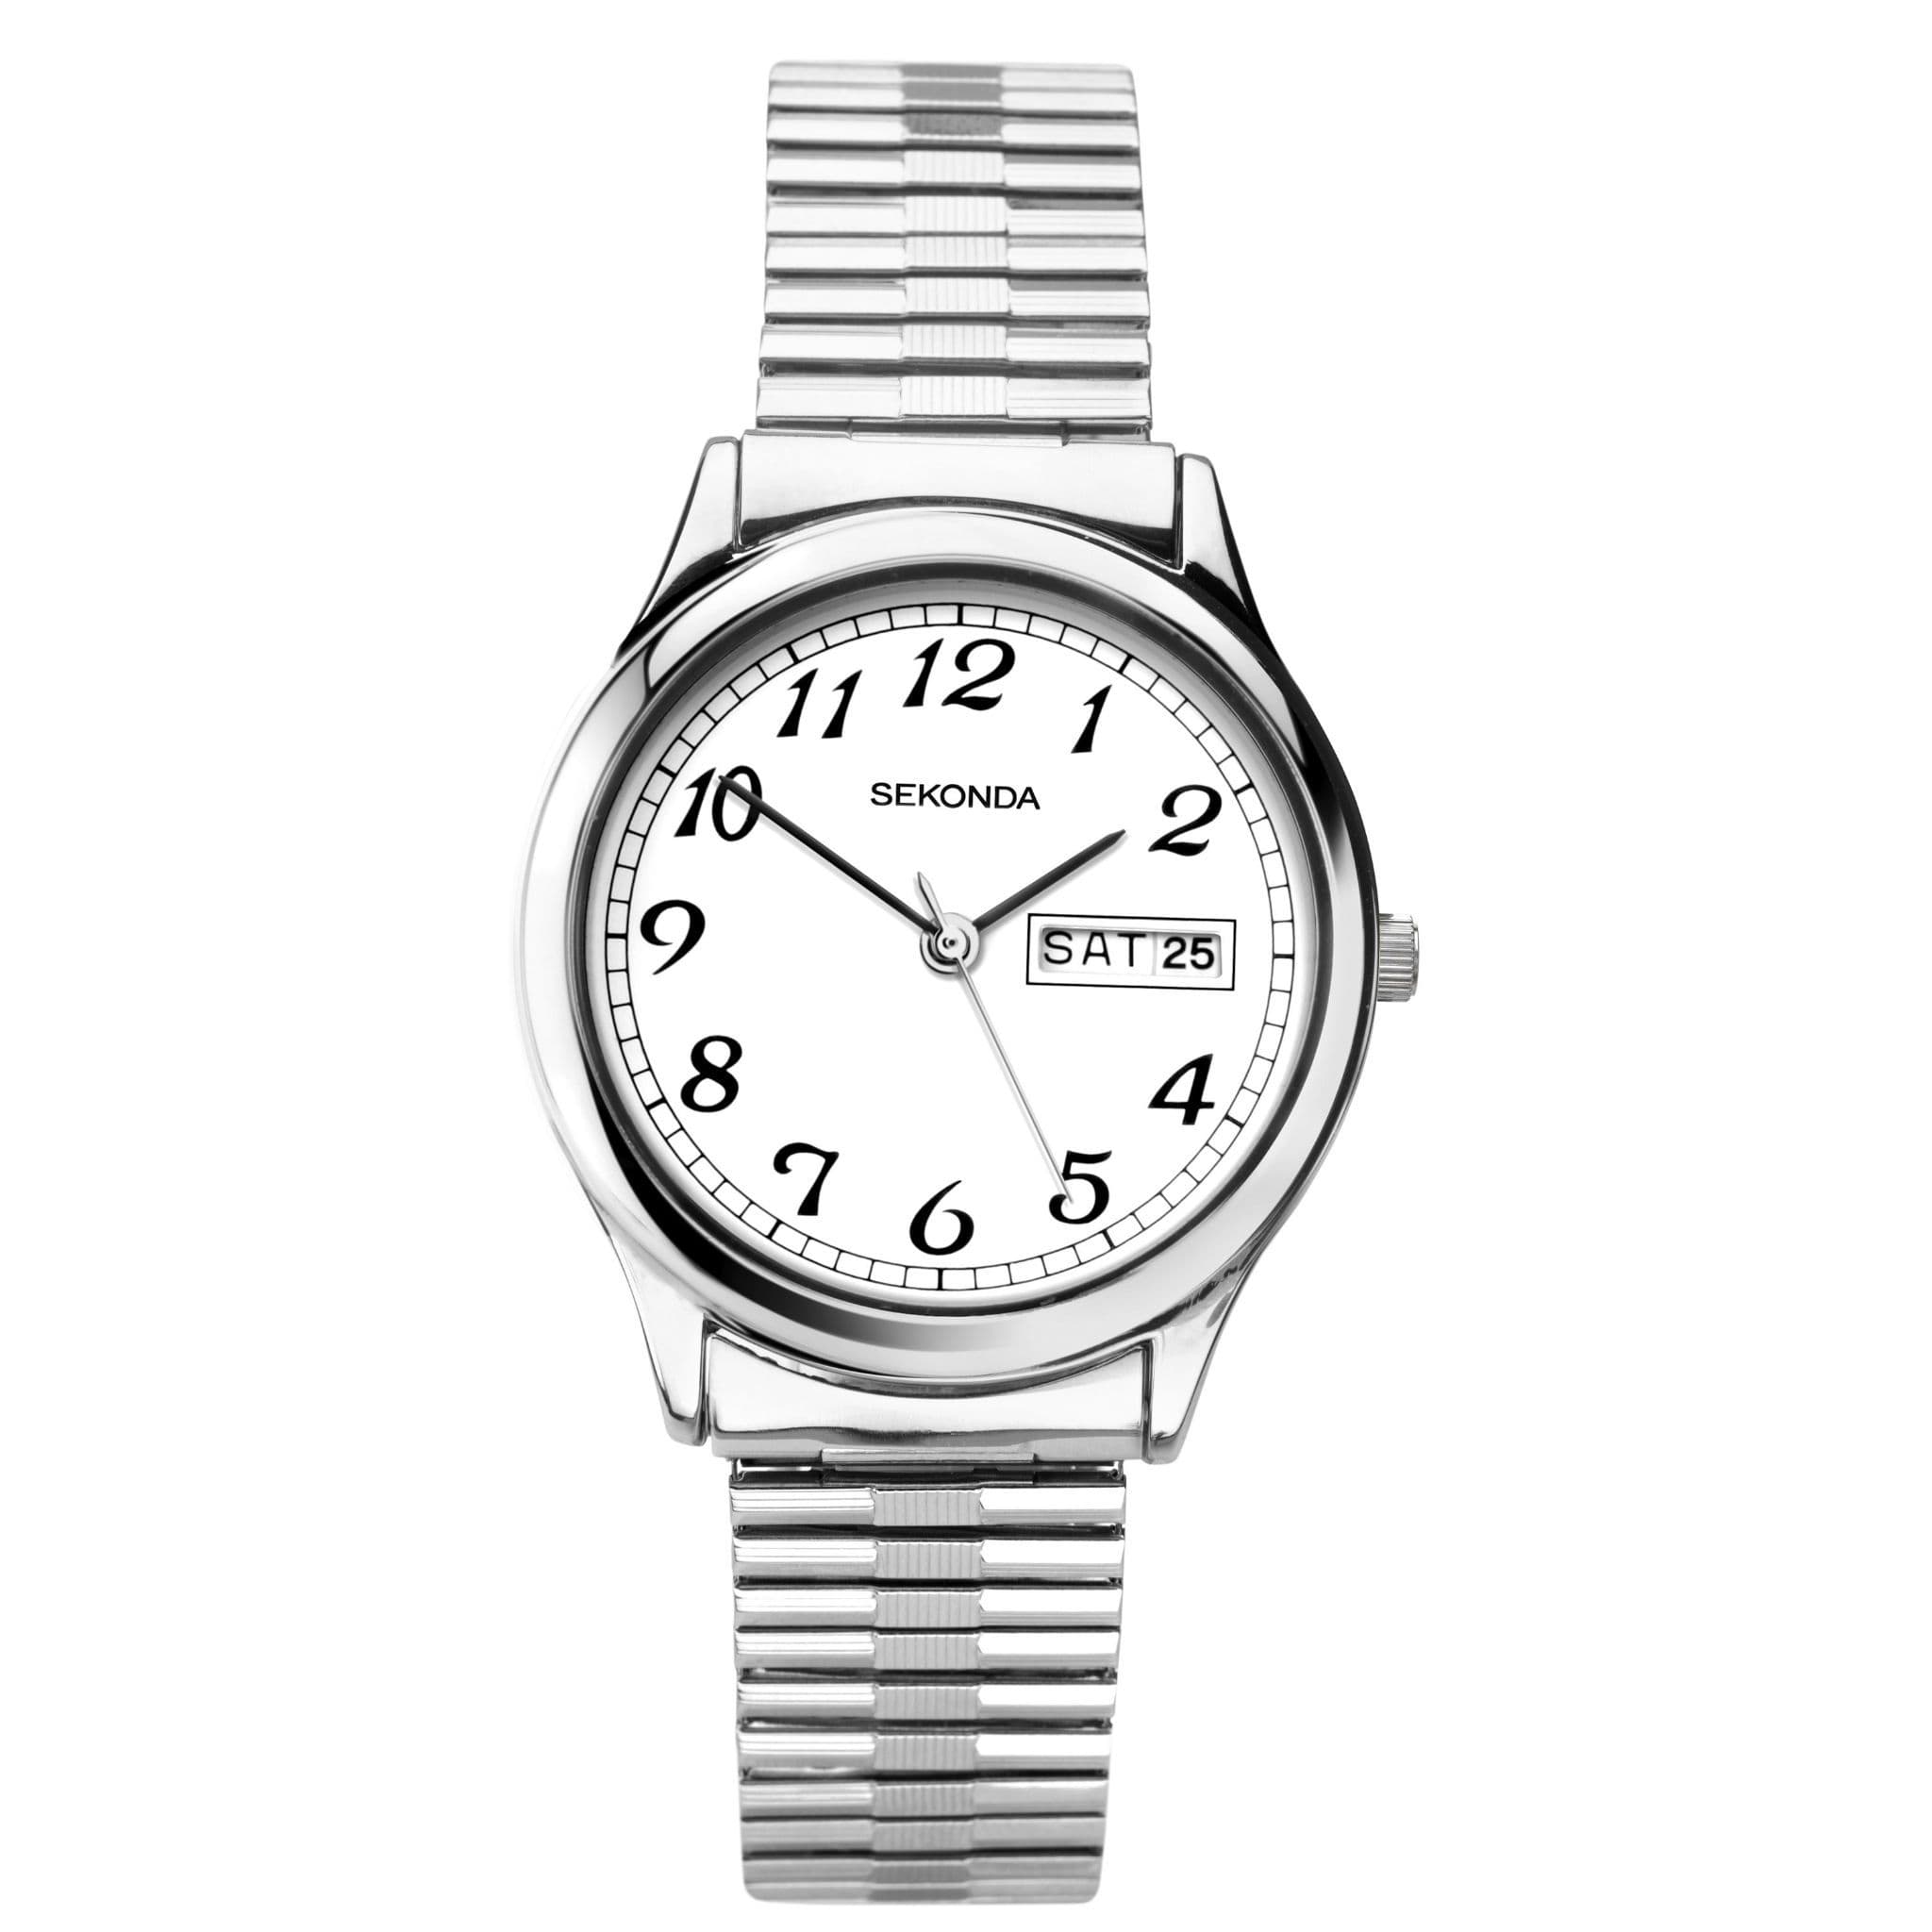 Citizen Watch 003-525-02901 - Men's Watches | Tena's Fine Diamonds and  Jewelry | Athens, GA